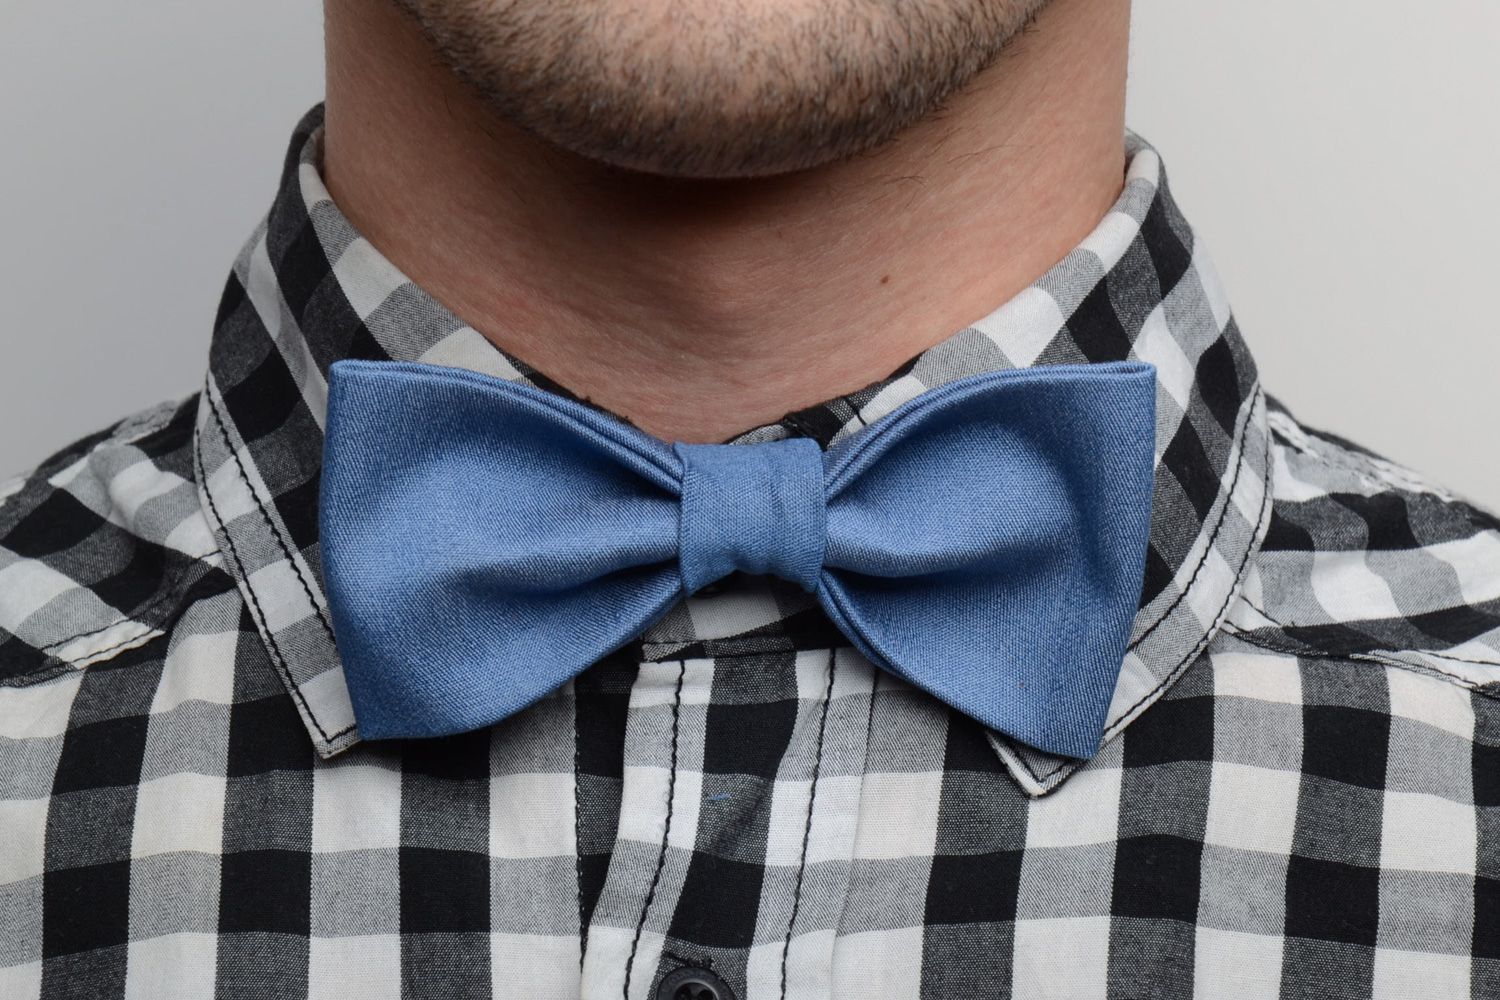 Stylish handmade bow tie sewn of light denim fabric unisex photo 1